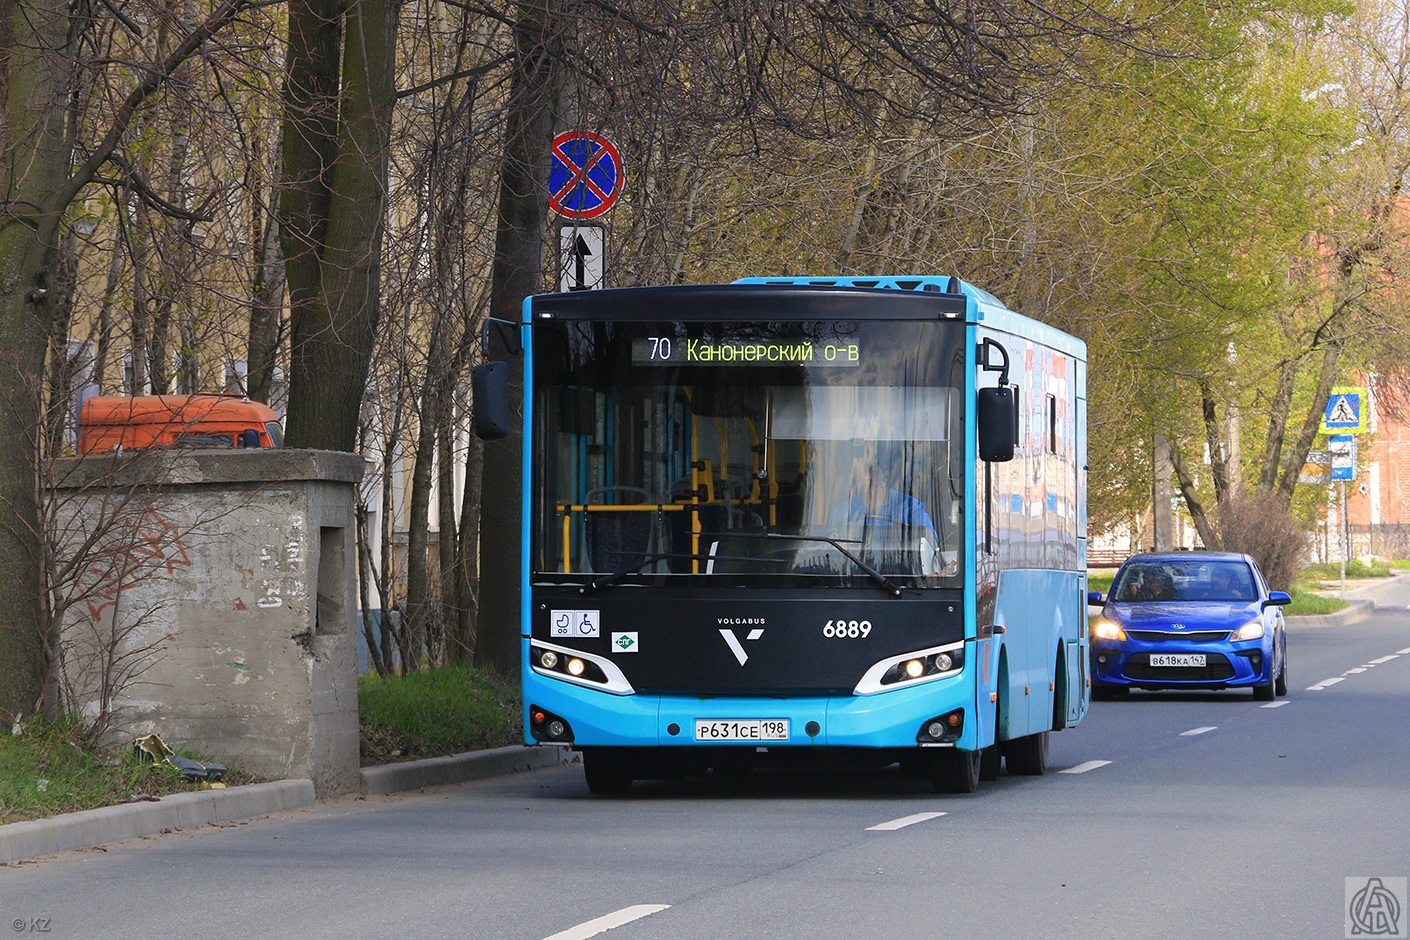 Sankt Petersburg, Volgabus-4298.G4 (LNG) Nr. 6889